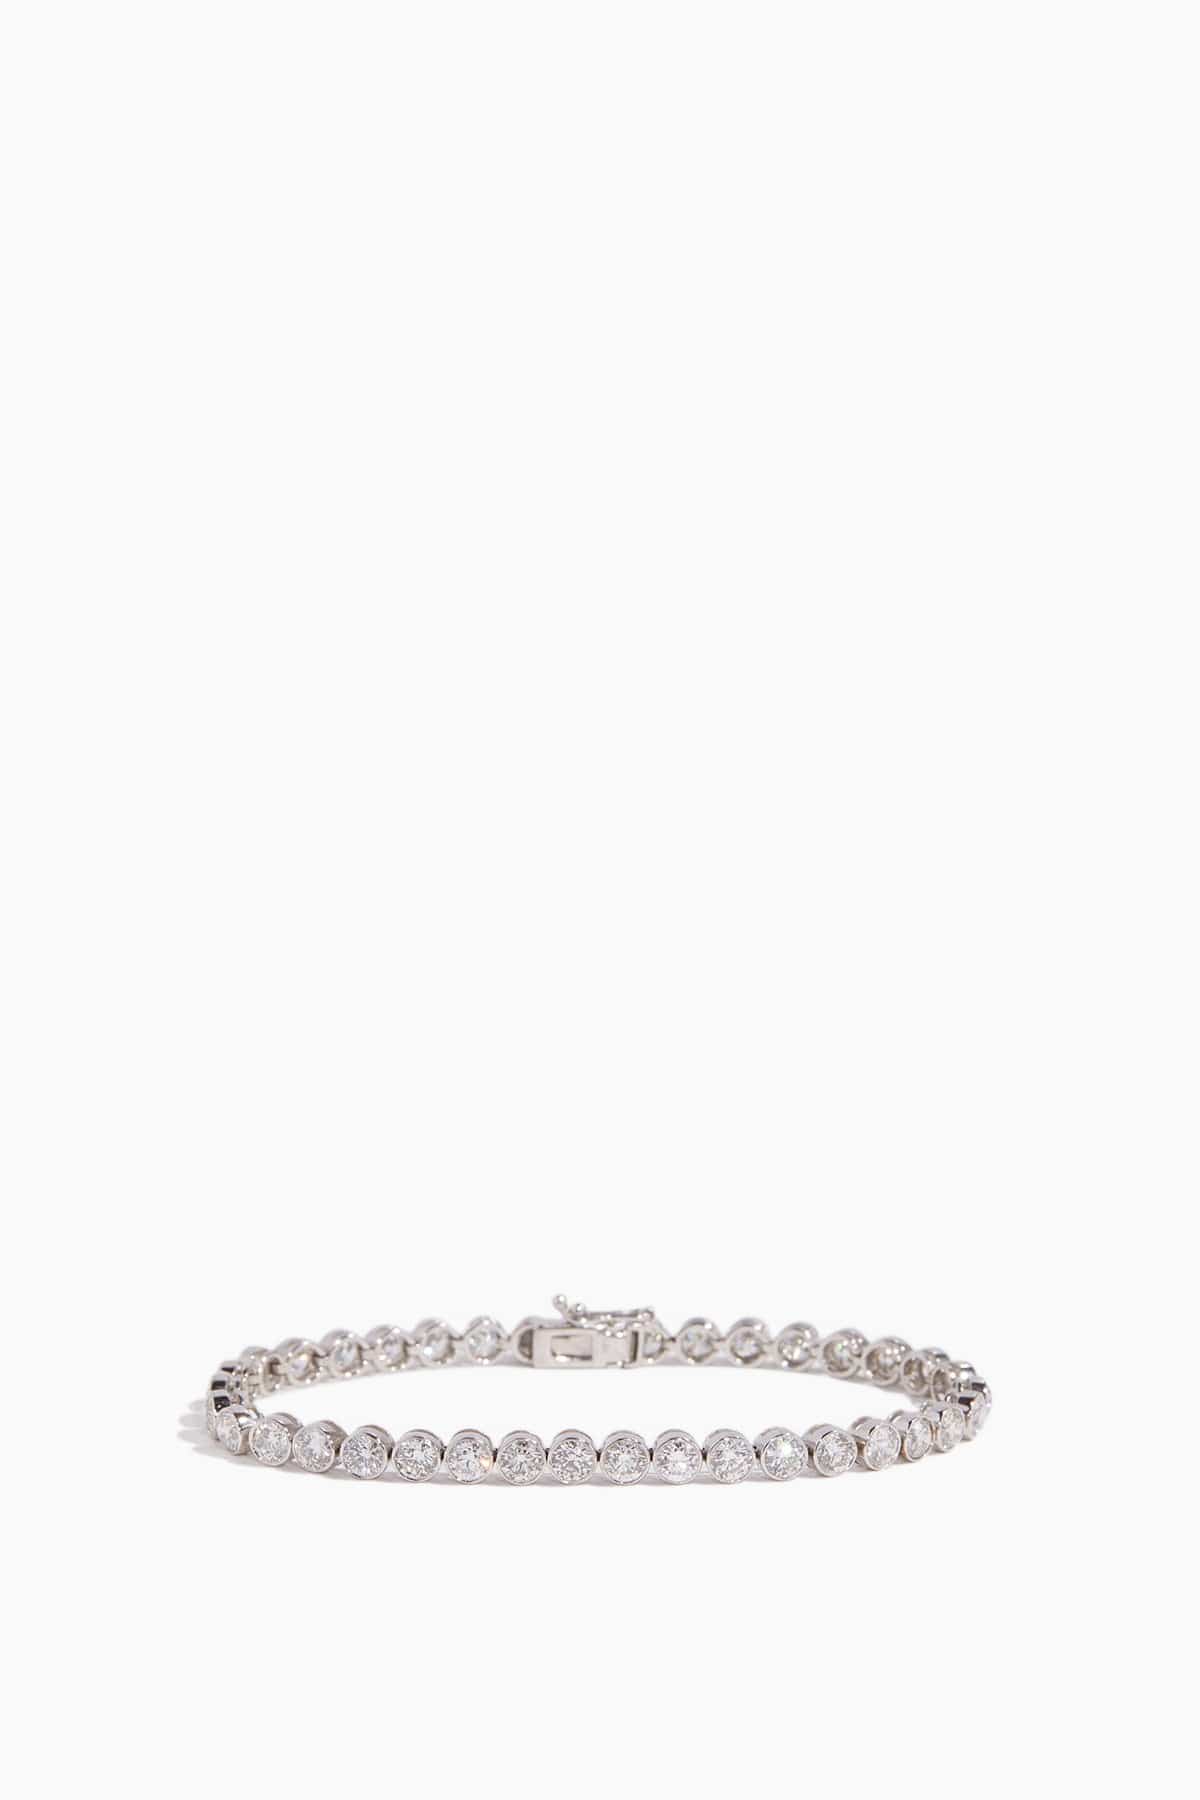 Stoned Fine Jewelry Bezel Set Round Diamond Bracelet in 14k White Gold - Size: One size